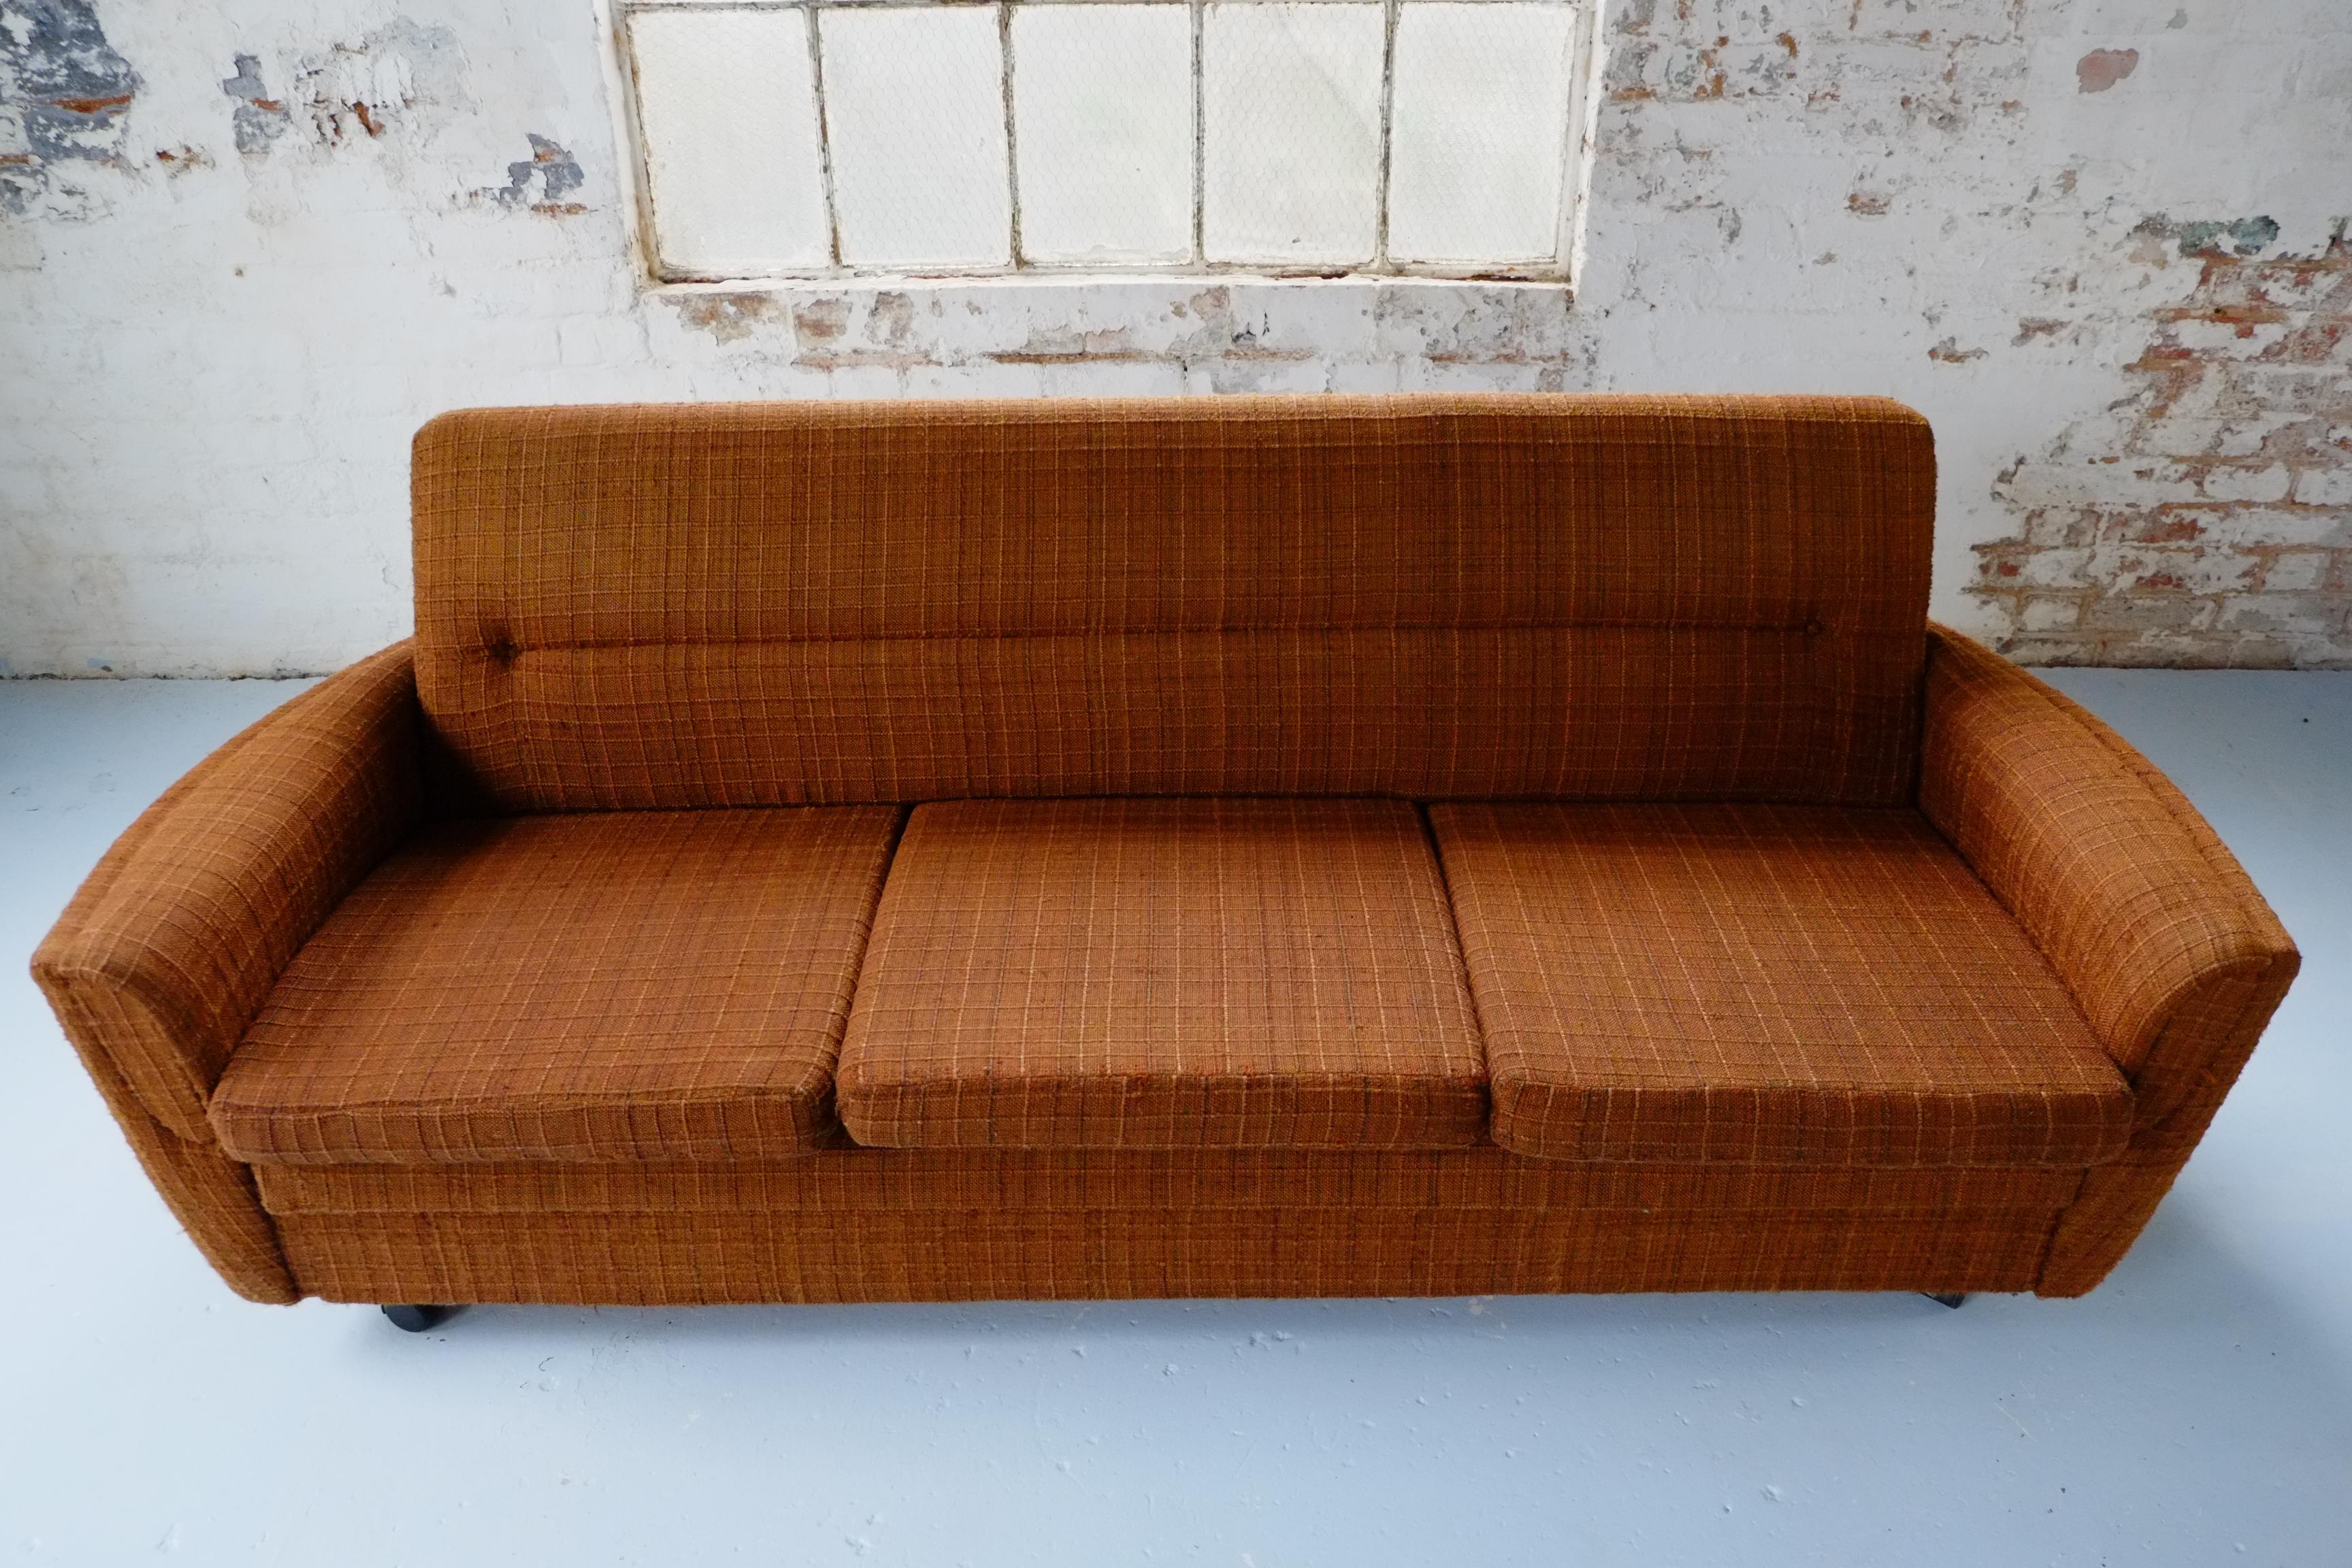 Classic 70's Vintage British Brown Sofa Bed Settee on Castors 1